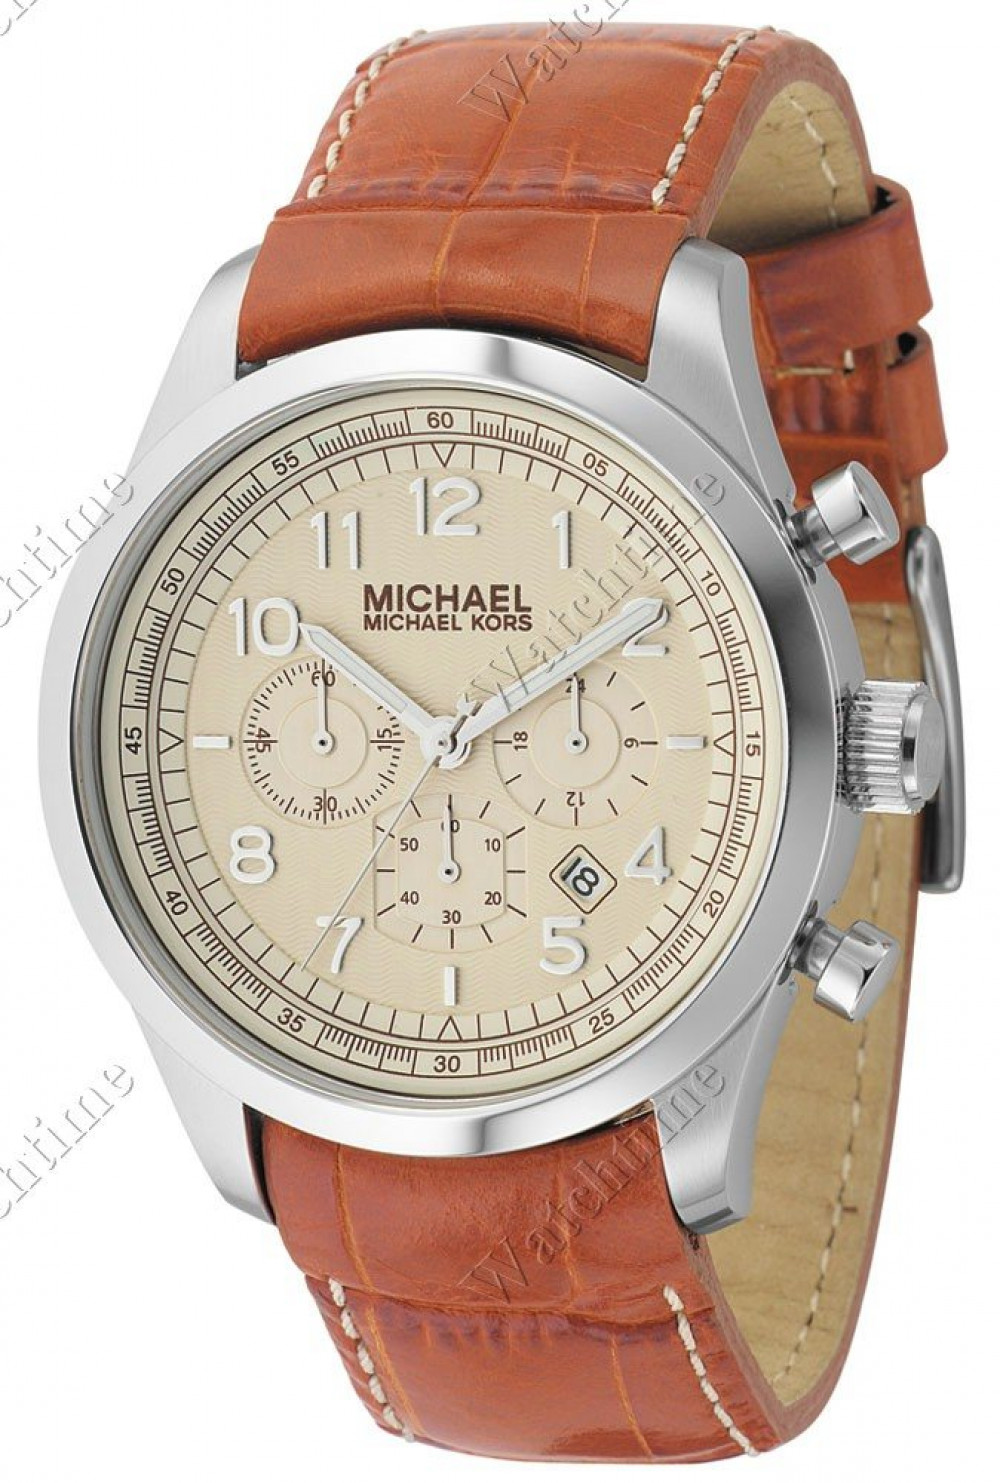 Zegarek firmy Michael Kors, model MK 8017